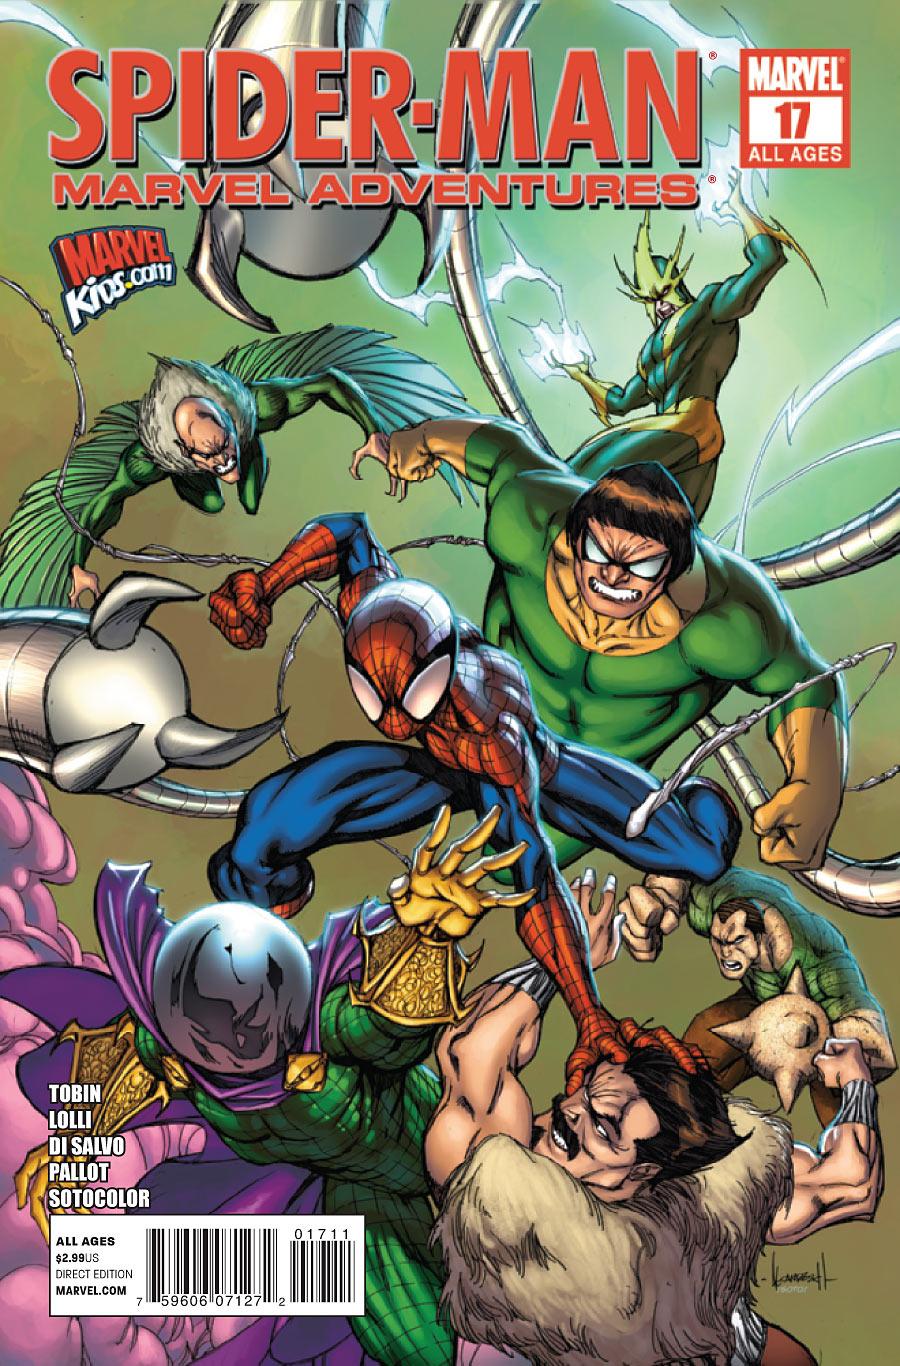 Marvel Adventures: Spider-Man Vol. 2 #17